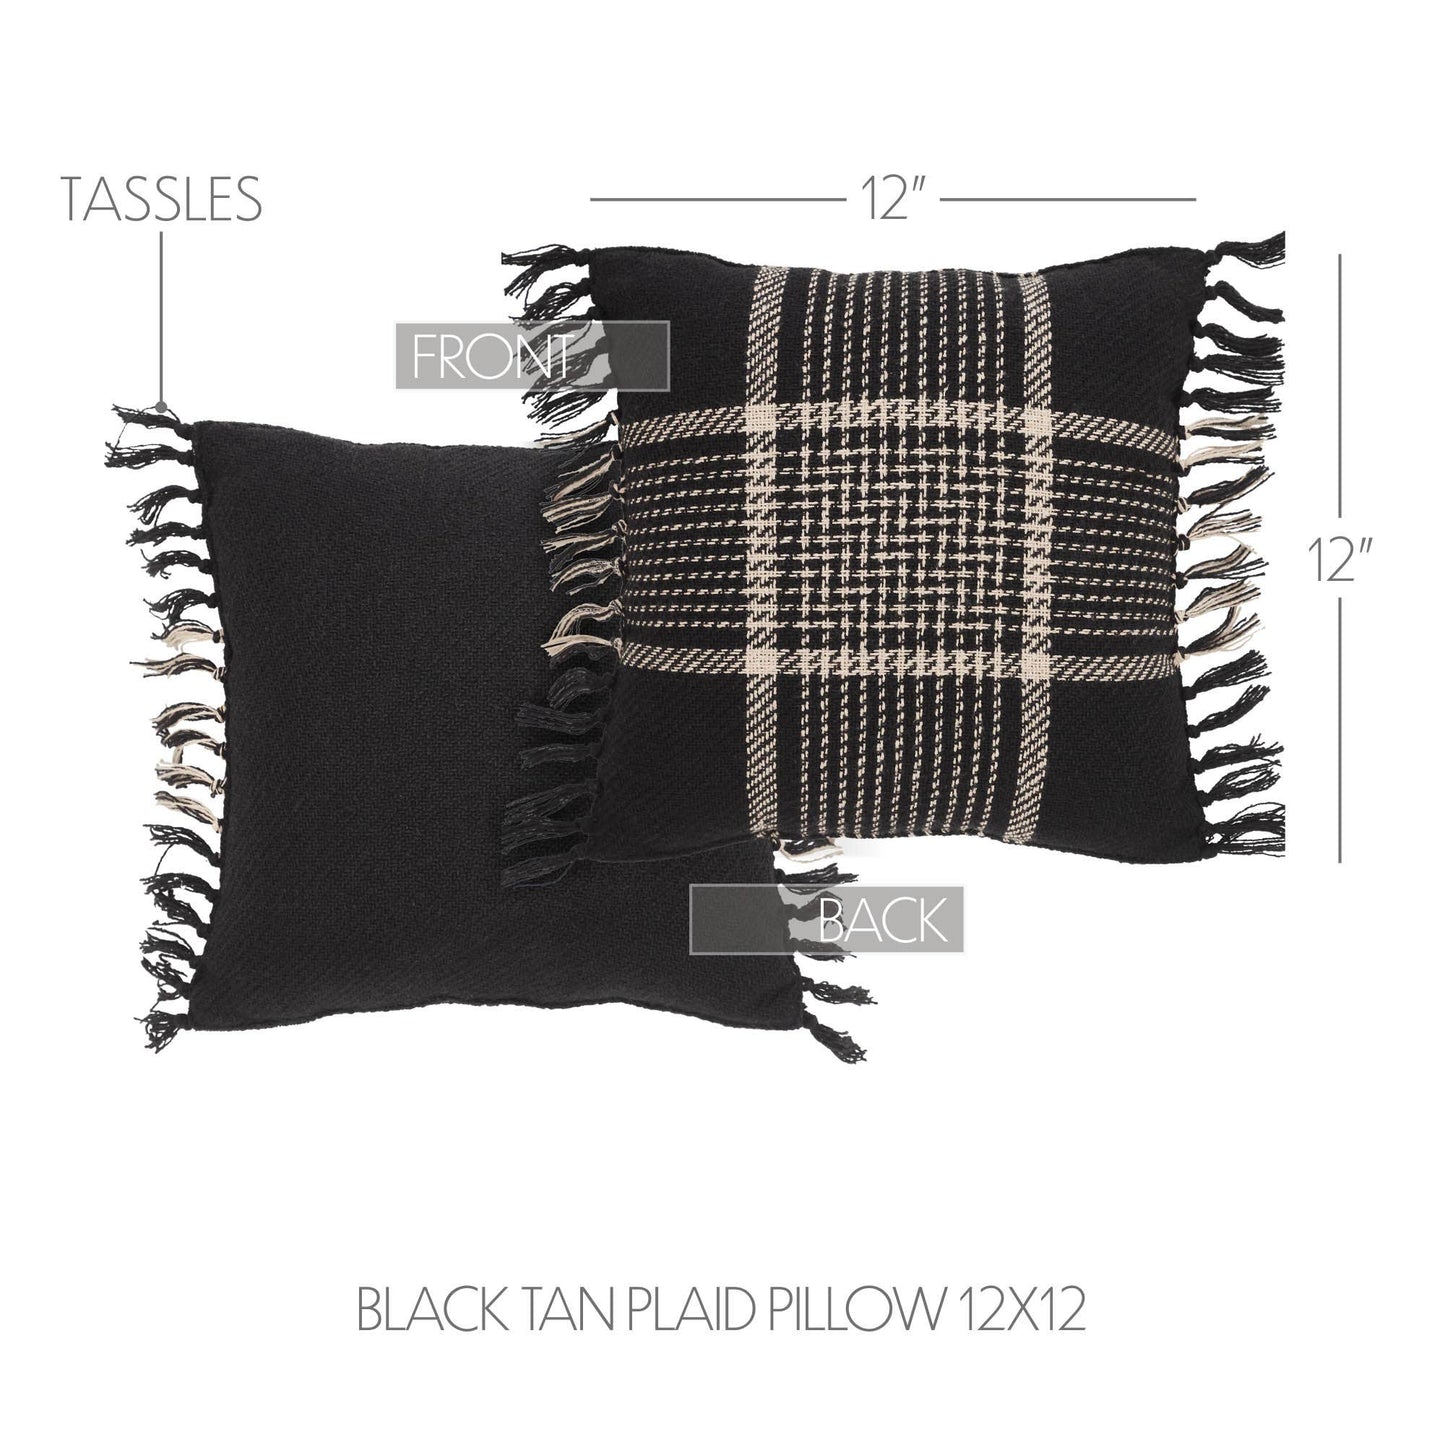 Eston Black Tan Plaid Pillow 12x12